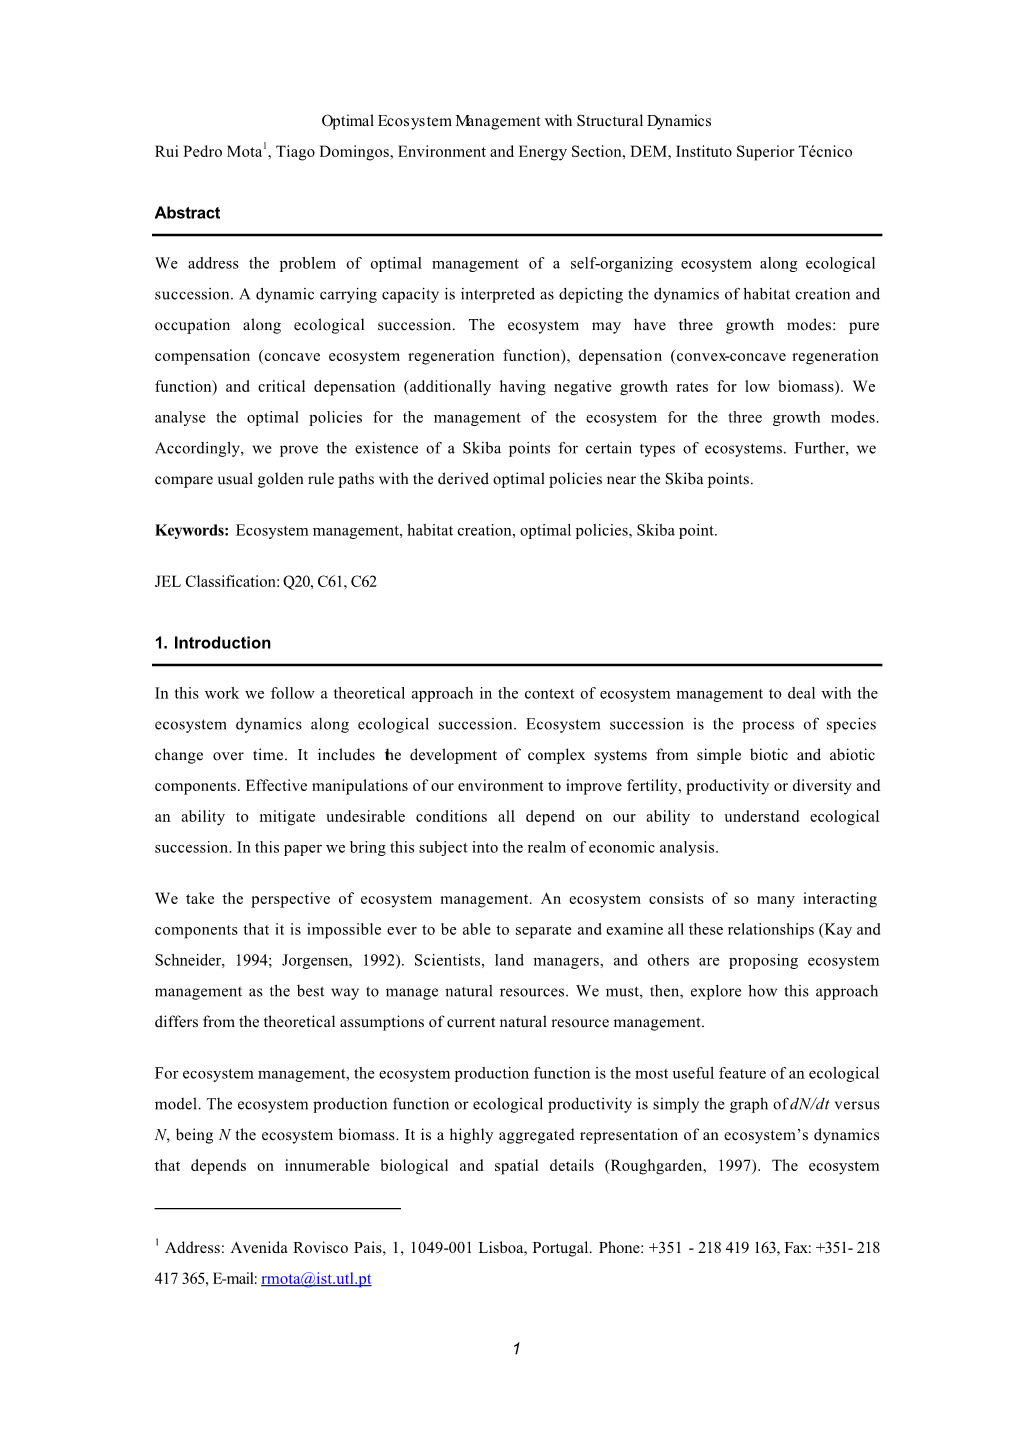 Mota Et Al 2004 Optimal Ecosystem Management with Structur…